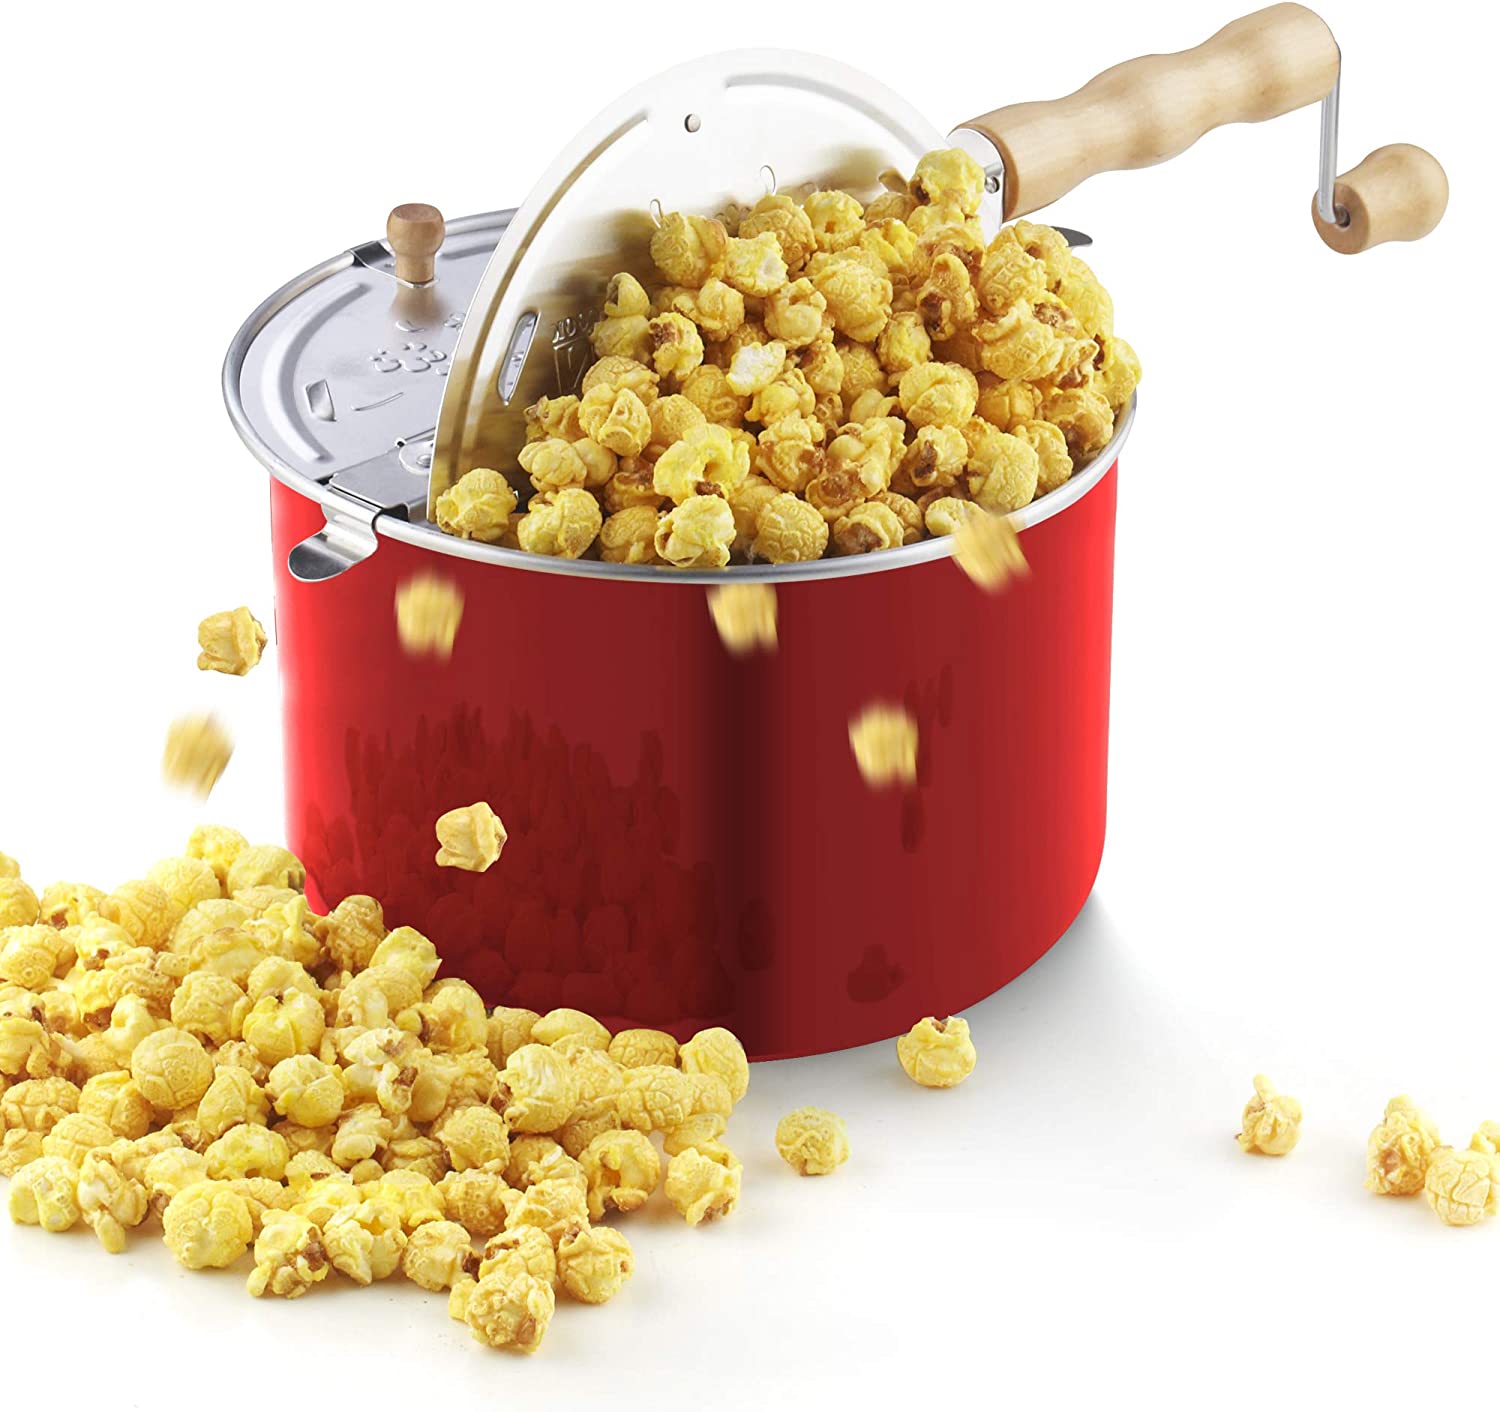 Stainless Steel Whirley Pop™ Popcorn Popper, 6 qt.